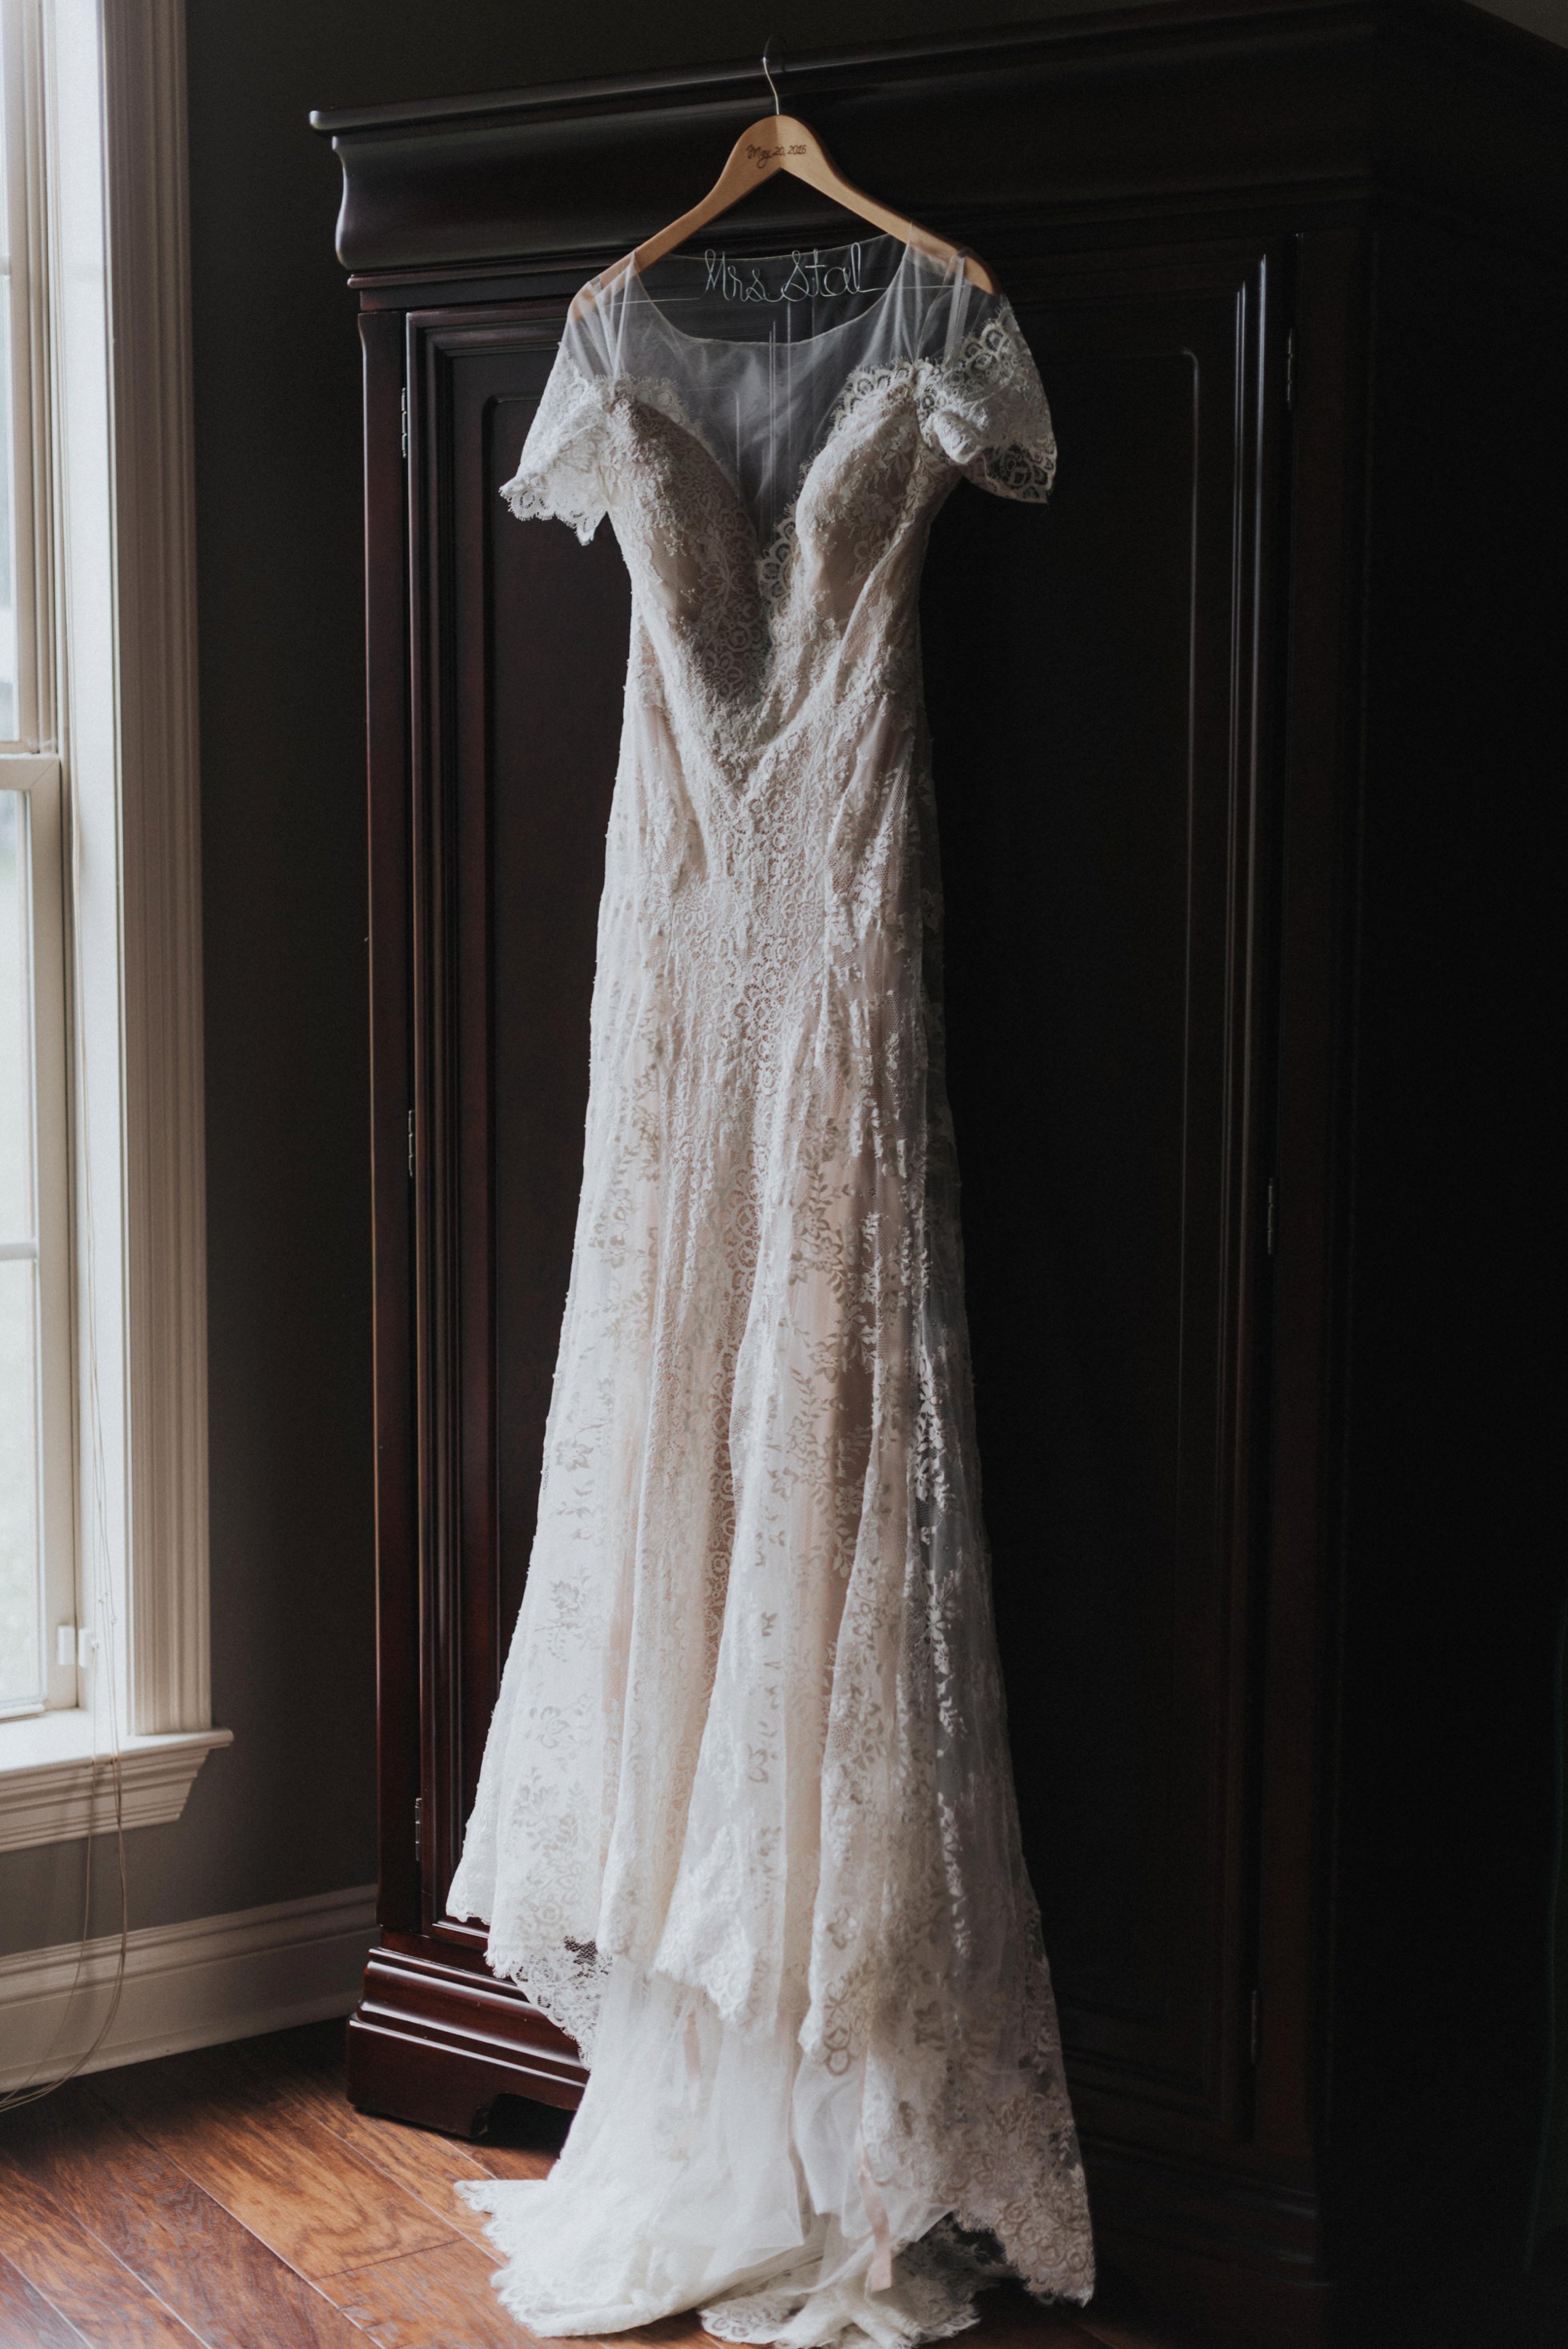 artistic bridal gown shot